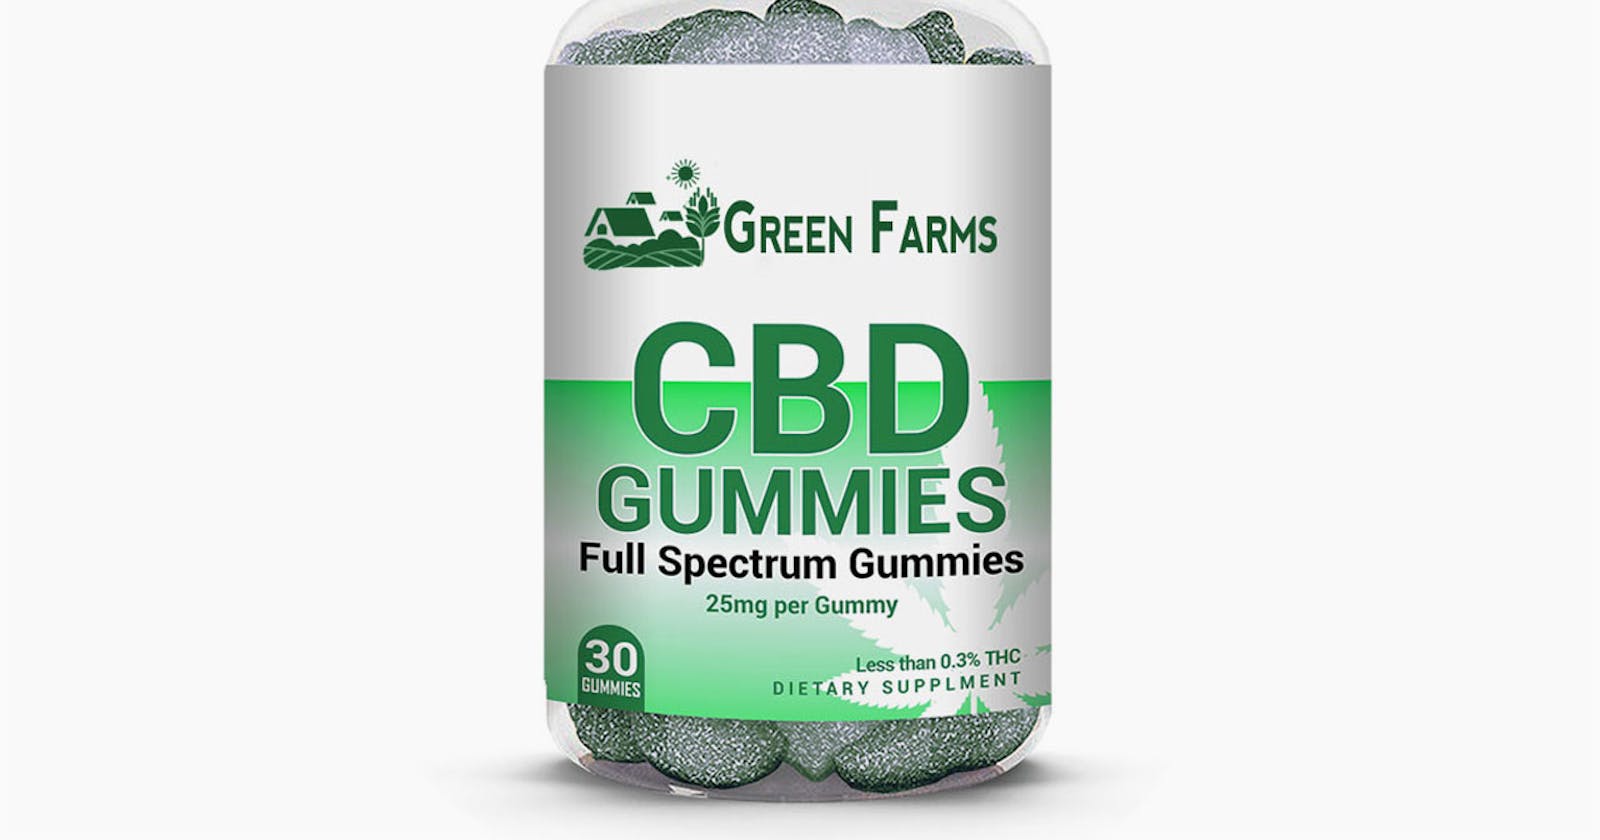 Green Farms CBD Gummies Reviews, Price & Where To Buy?